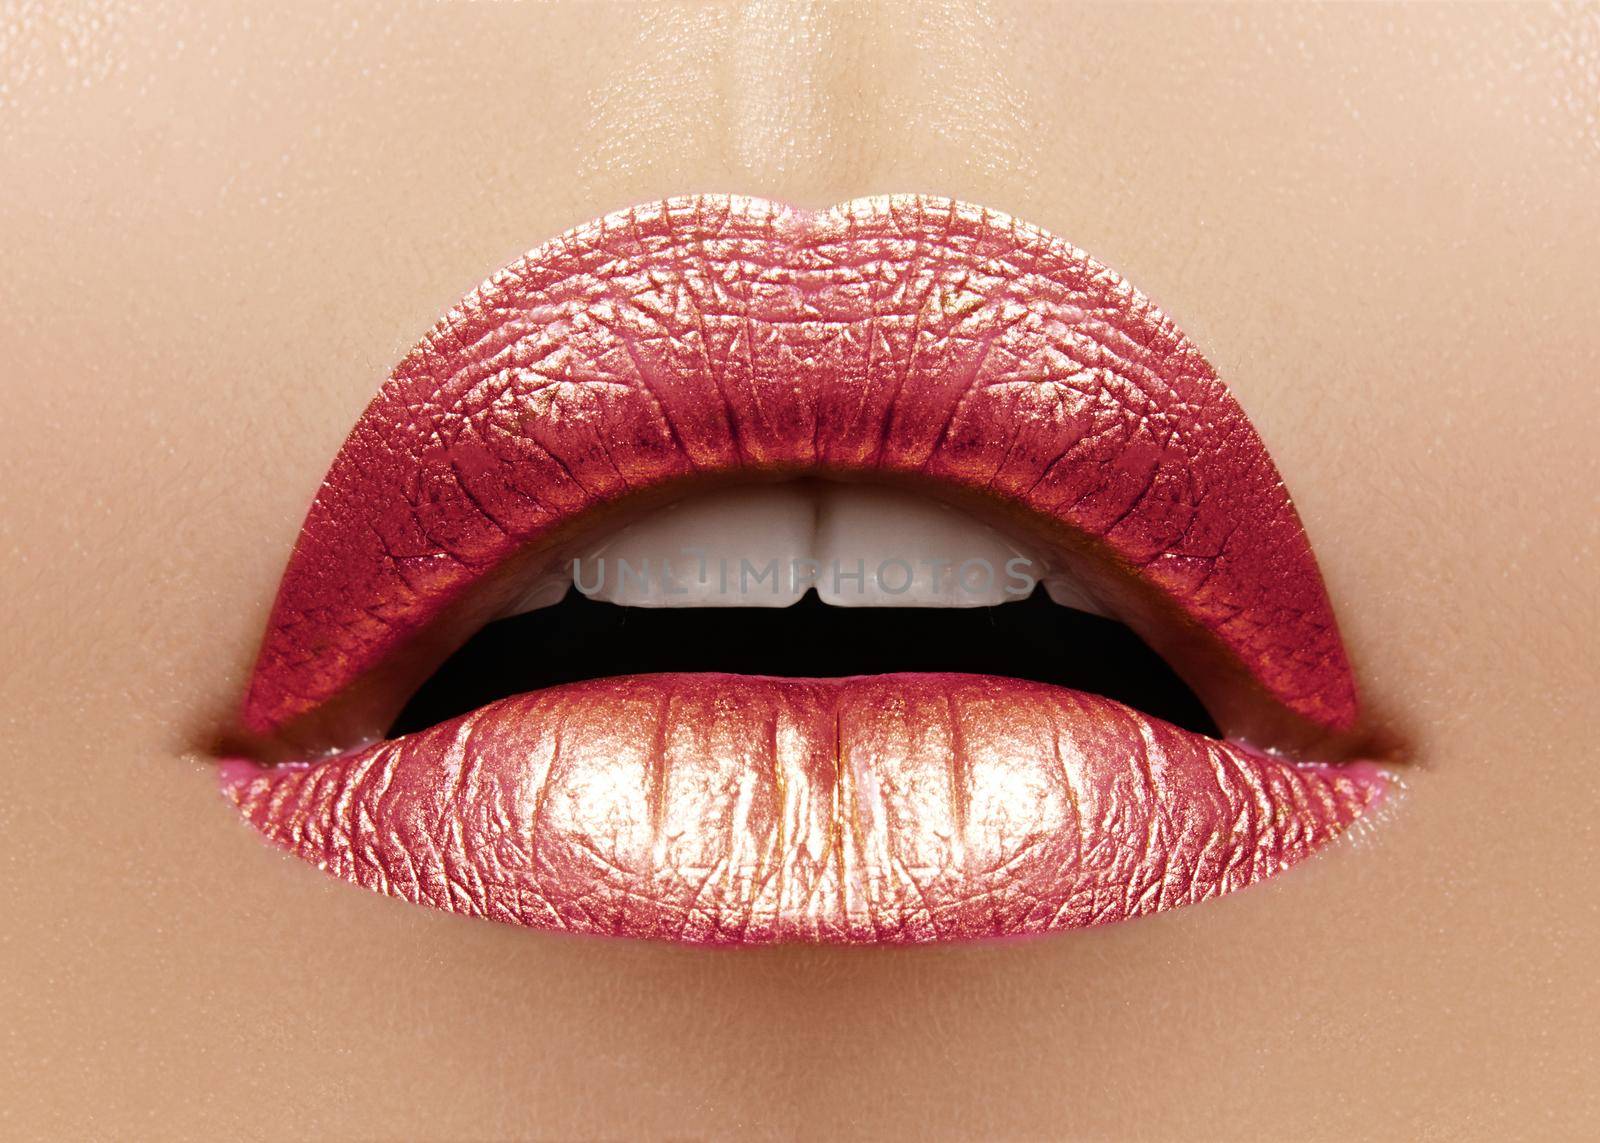 Beautiful Closeup with Female Plump Lips with Shiny Pink Makeup. Fashion Celebrate Make-up, Glitter Cosmetic. Metalic Lip Makeup